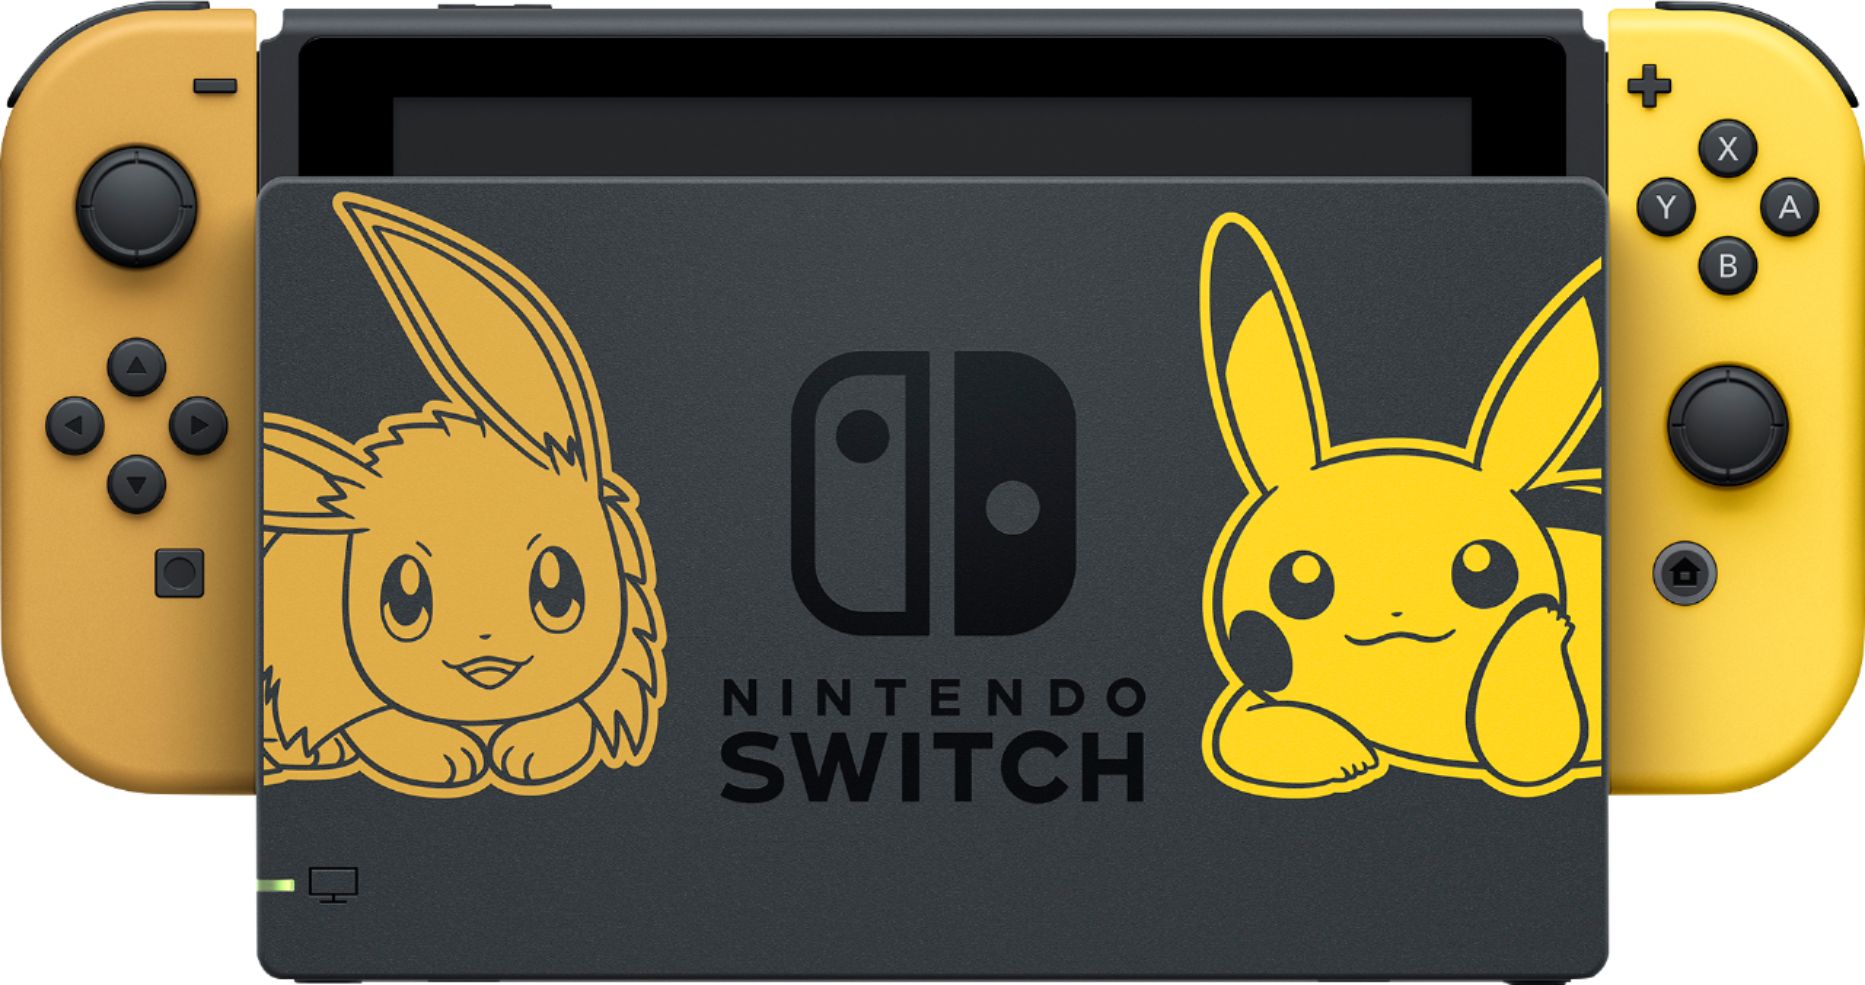 Nintendo Switch Pikachu Eevee Edition With Pokémon Lets Go Pikachu Poké Ball Plus Gray